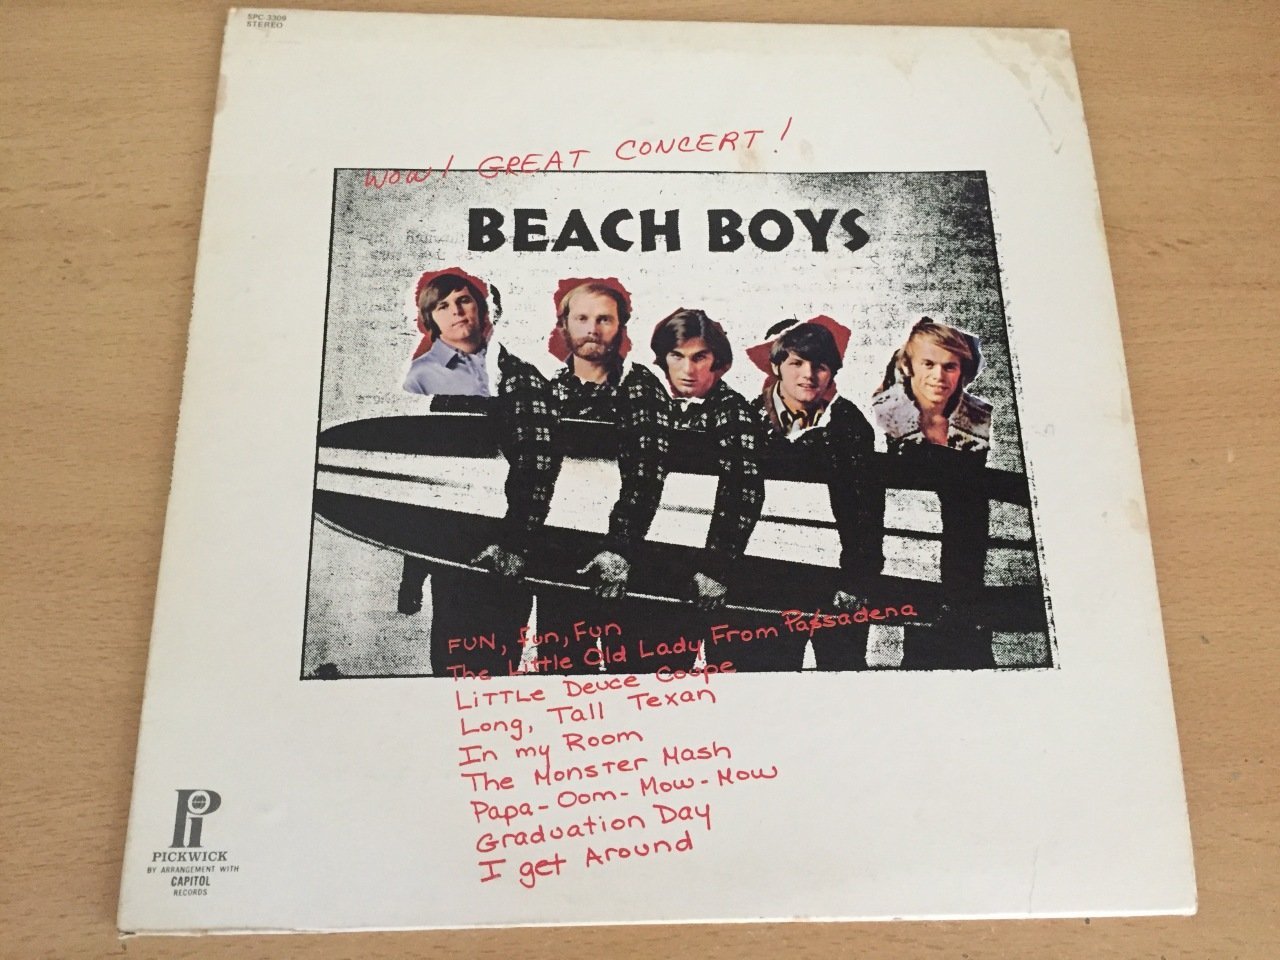 The Beach Boys ‎– Wow! Great Concert!